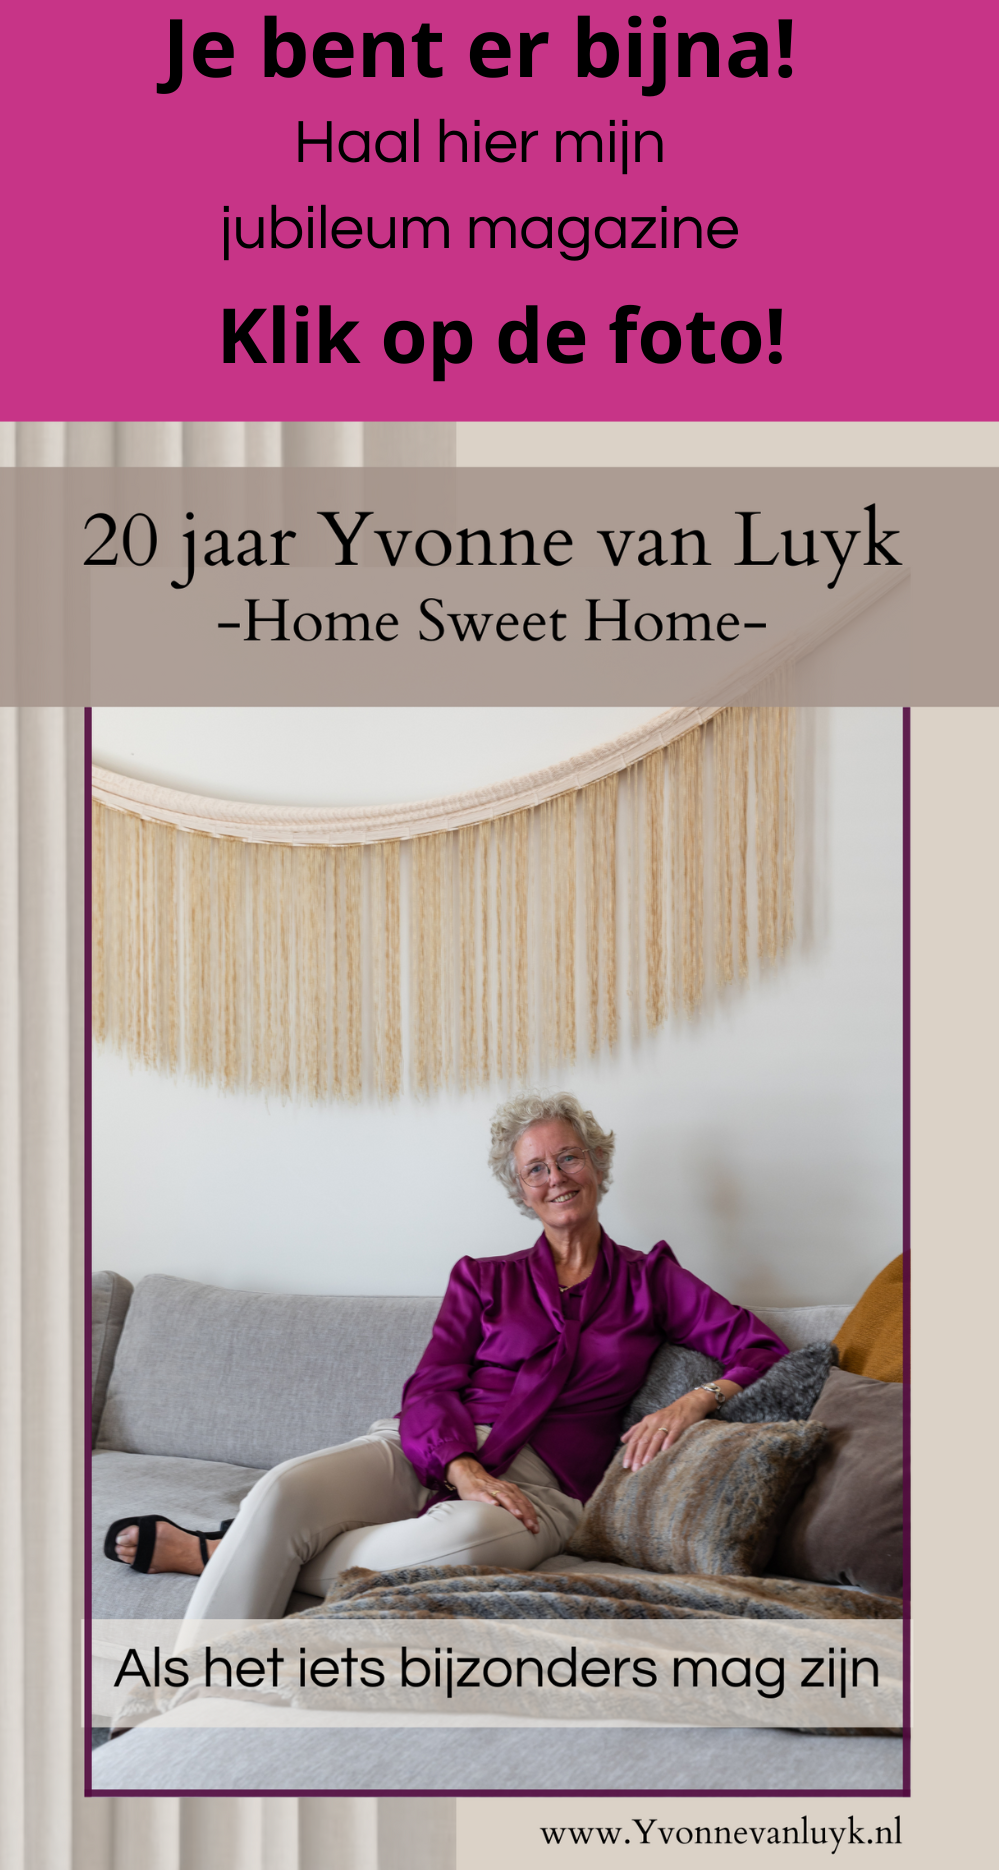 Jubileum magazine Yvonne van Luyk - Home Sweet Home